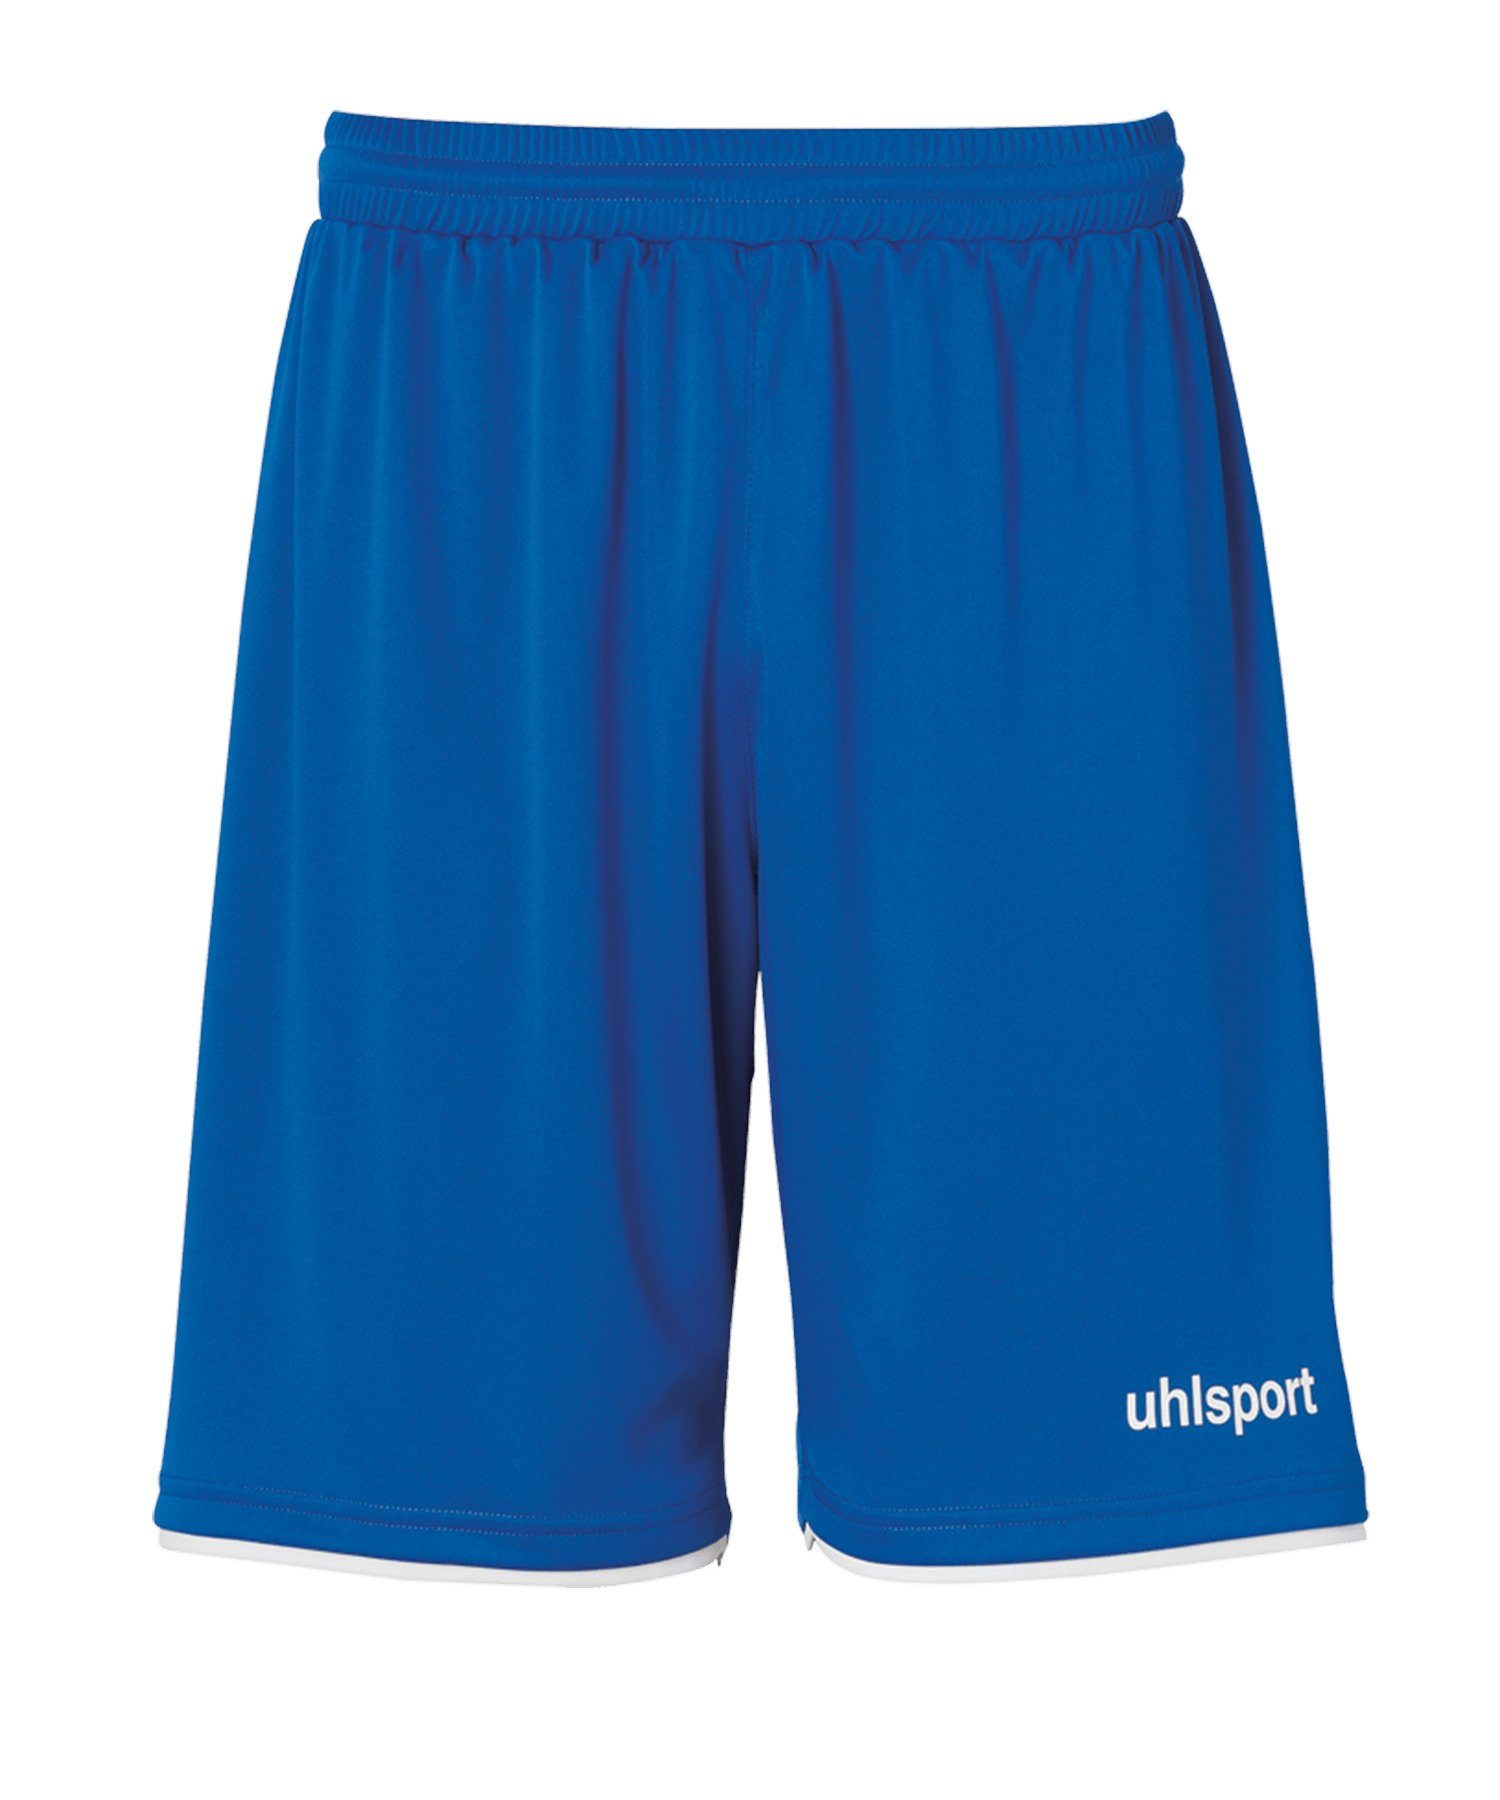 uhlsport Sporthose Club Short blauweiss